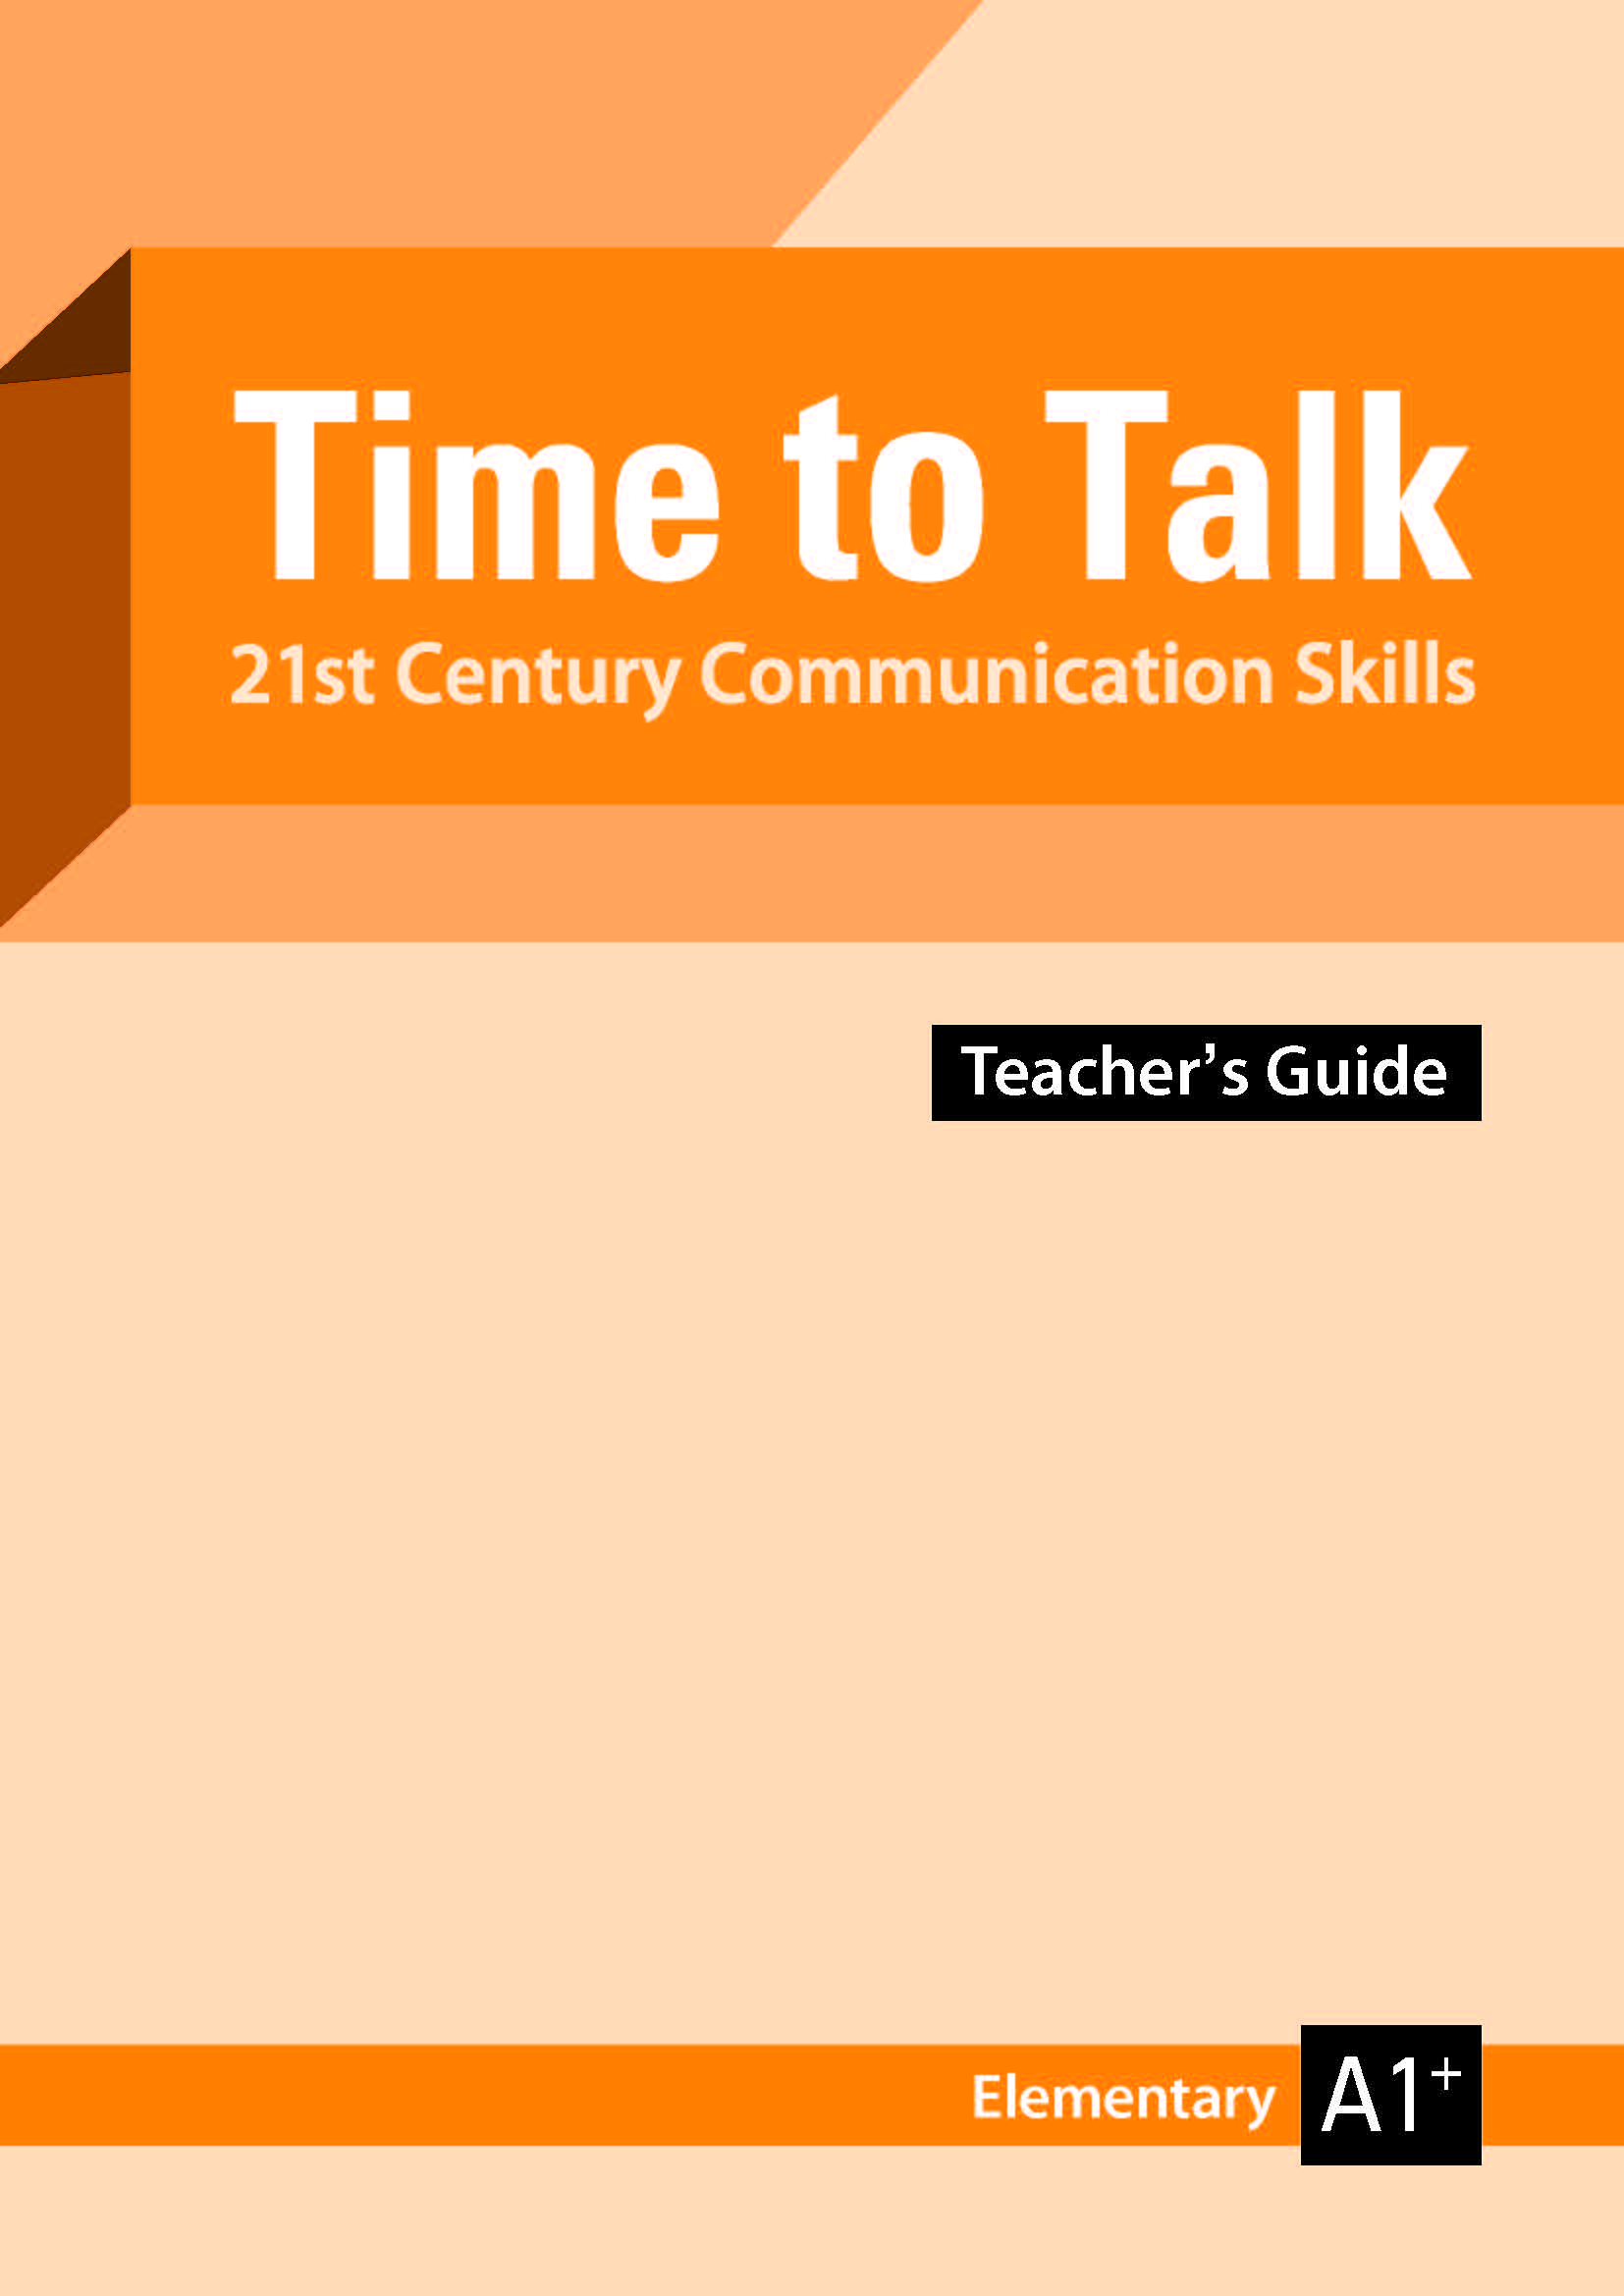 Elementary skills. Time to talk Elementary. 21 Century communication части. Communication skills in the 21st Century. Time to talk b1+ ответы.